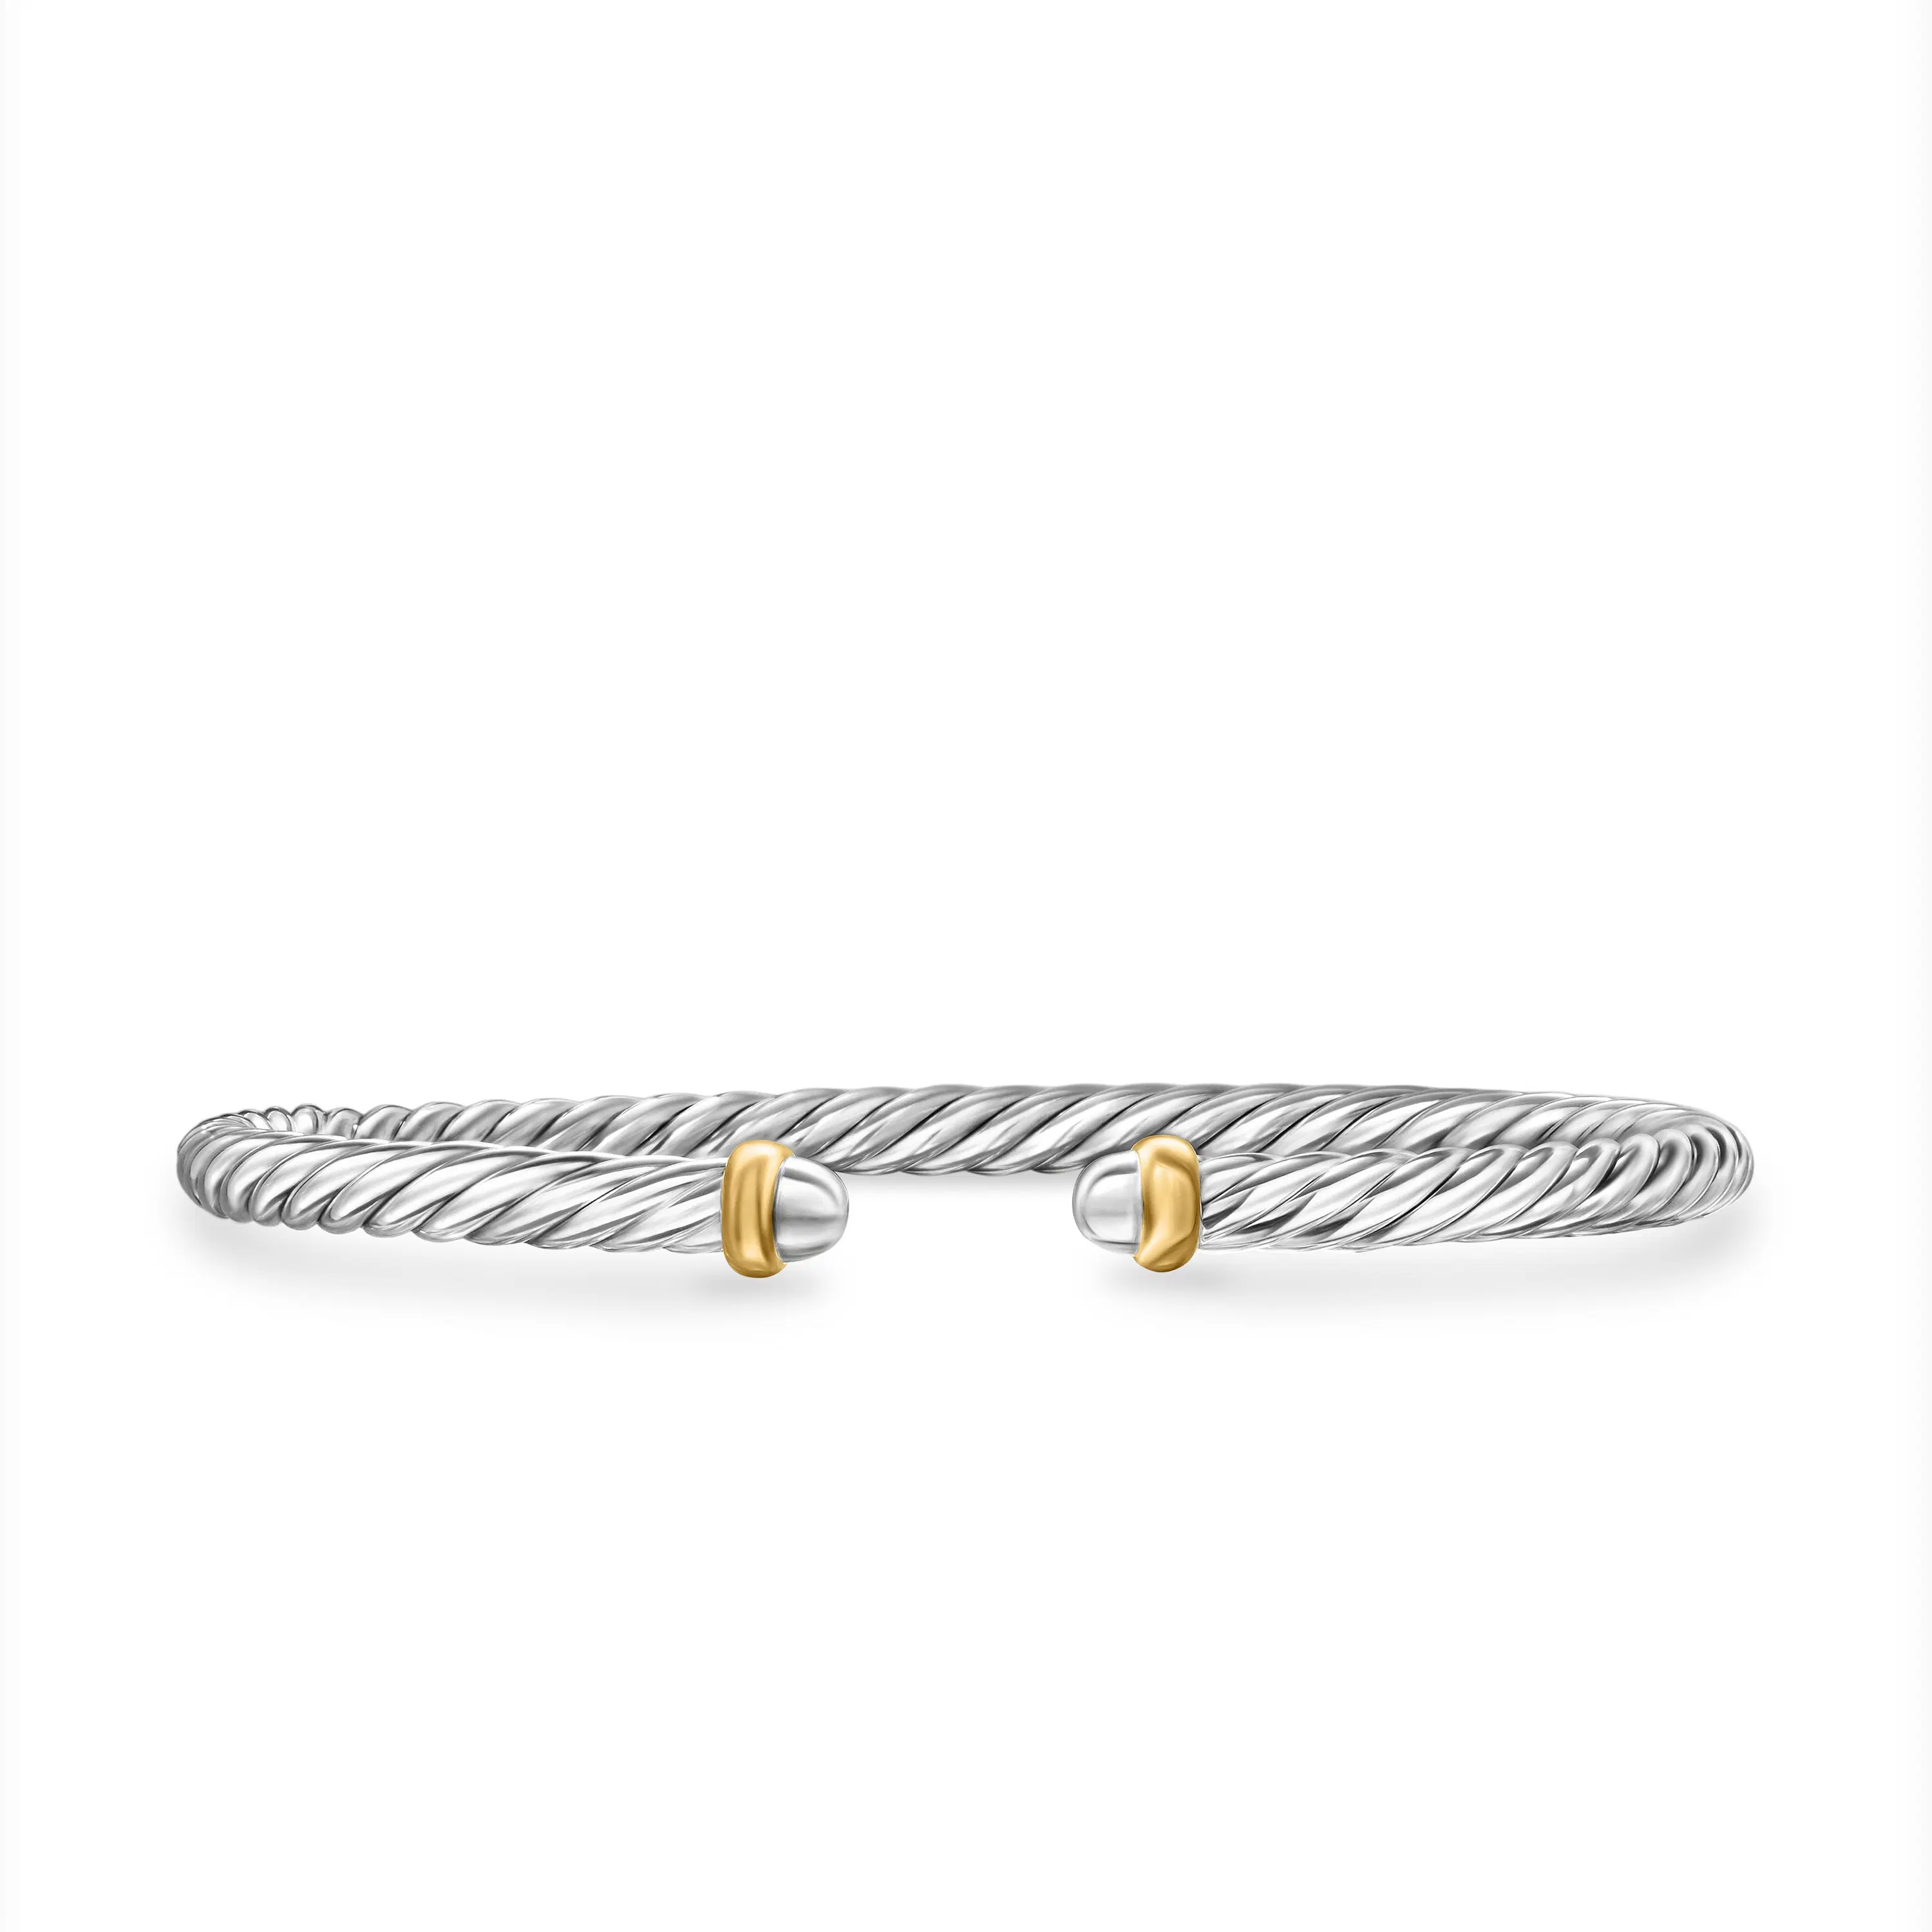 David Yurman Sterling Silver Cable Flex Bracelet with Gold, Size Large